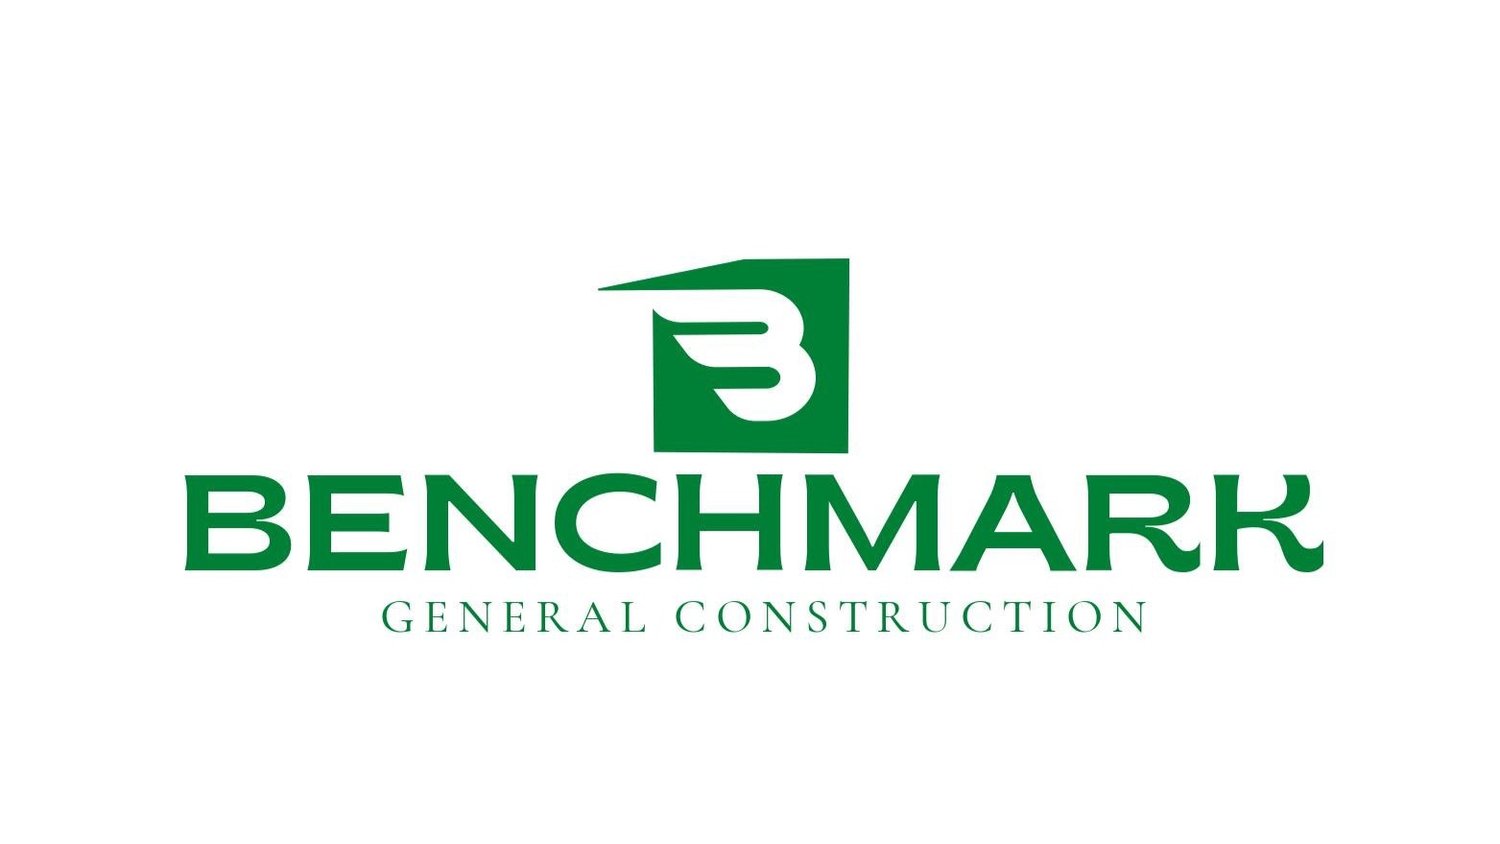 Benchmark General Construction